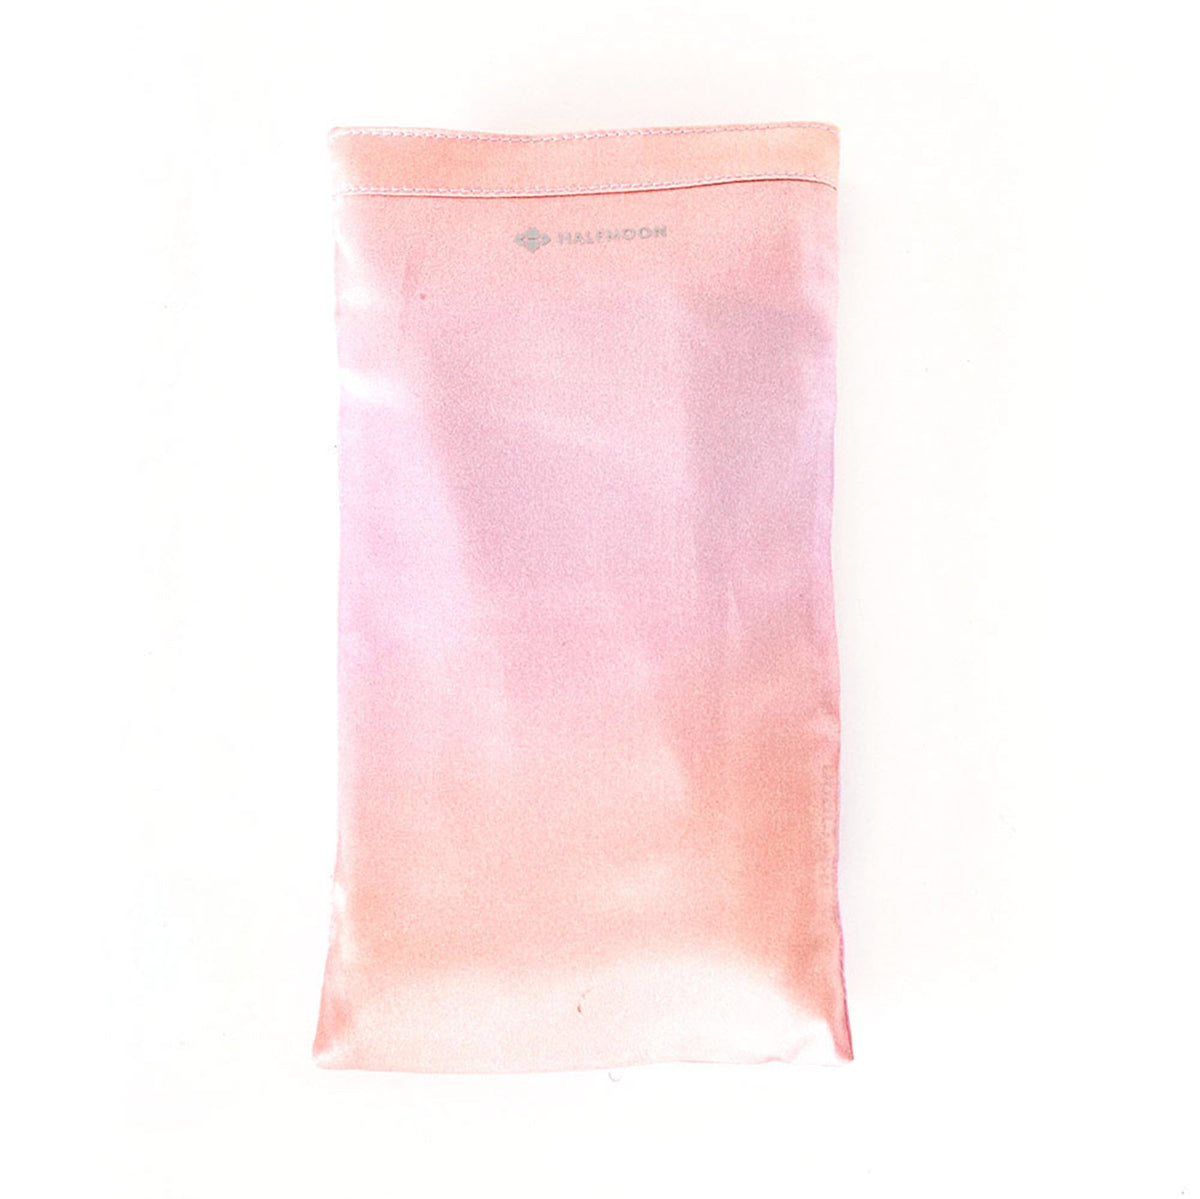 Halfmoon Crystal Collection Silk Eye Pillow in rose quartz